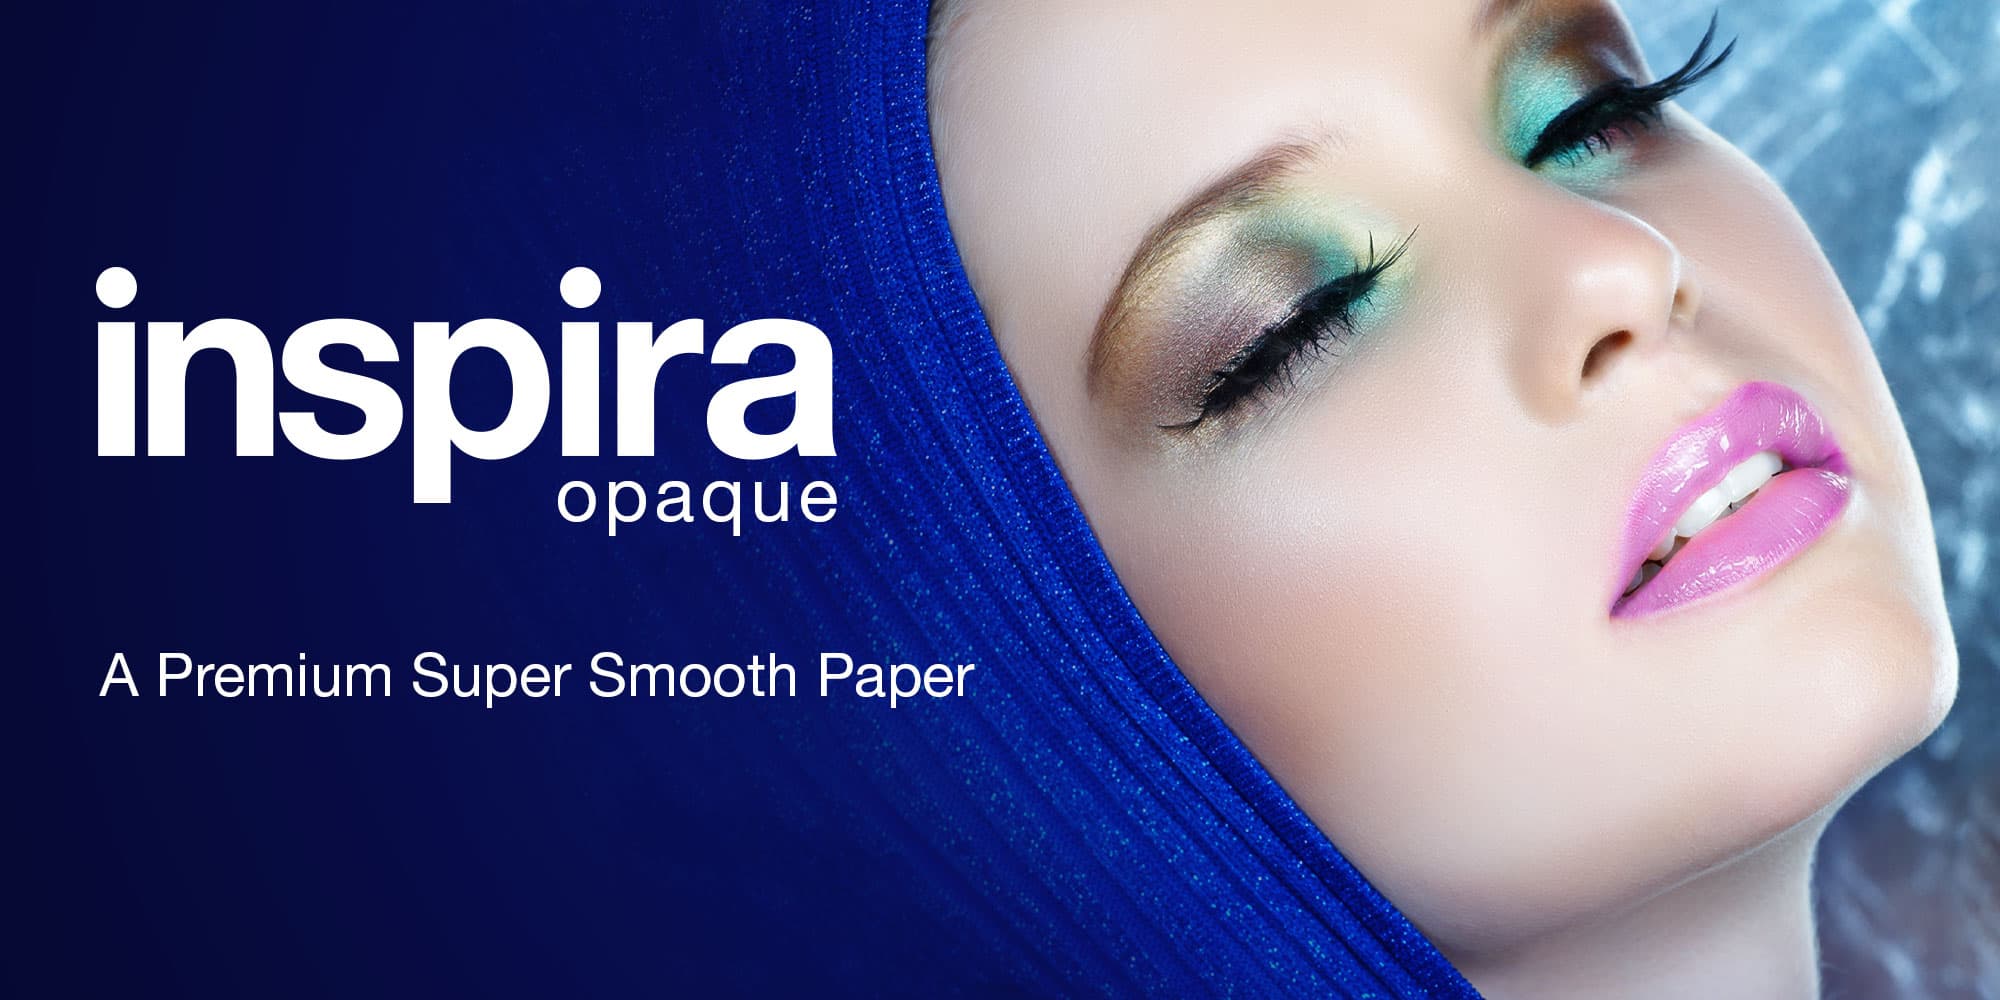 Inspira Opaque - A Premium Super Smooth Paper